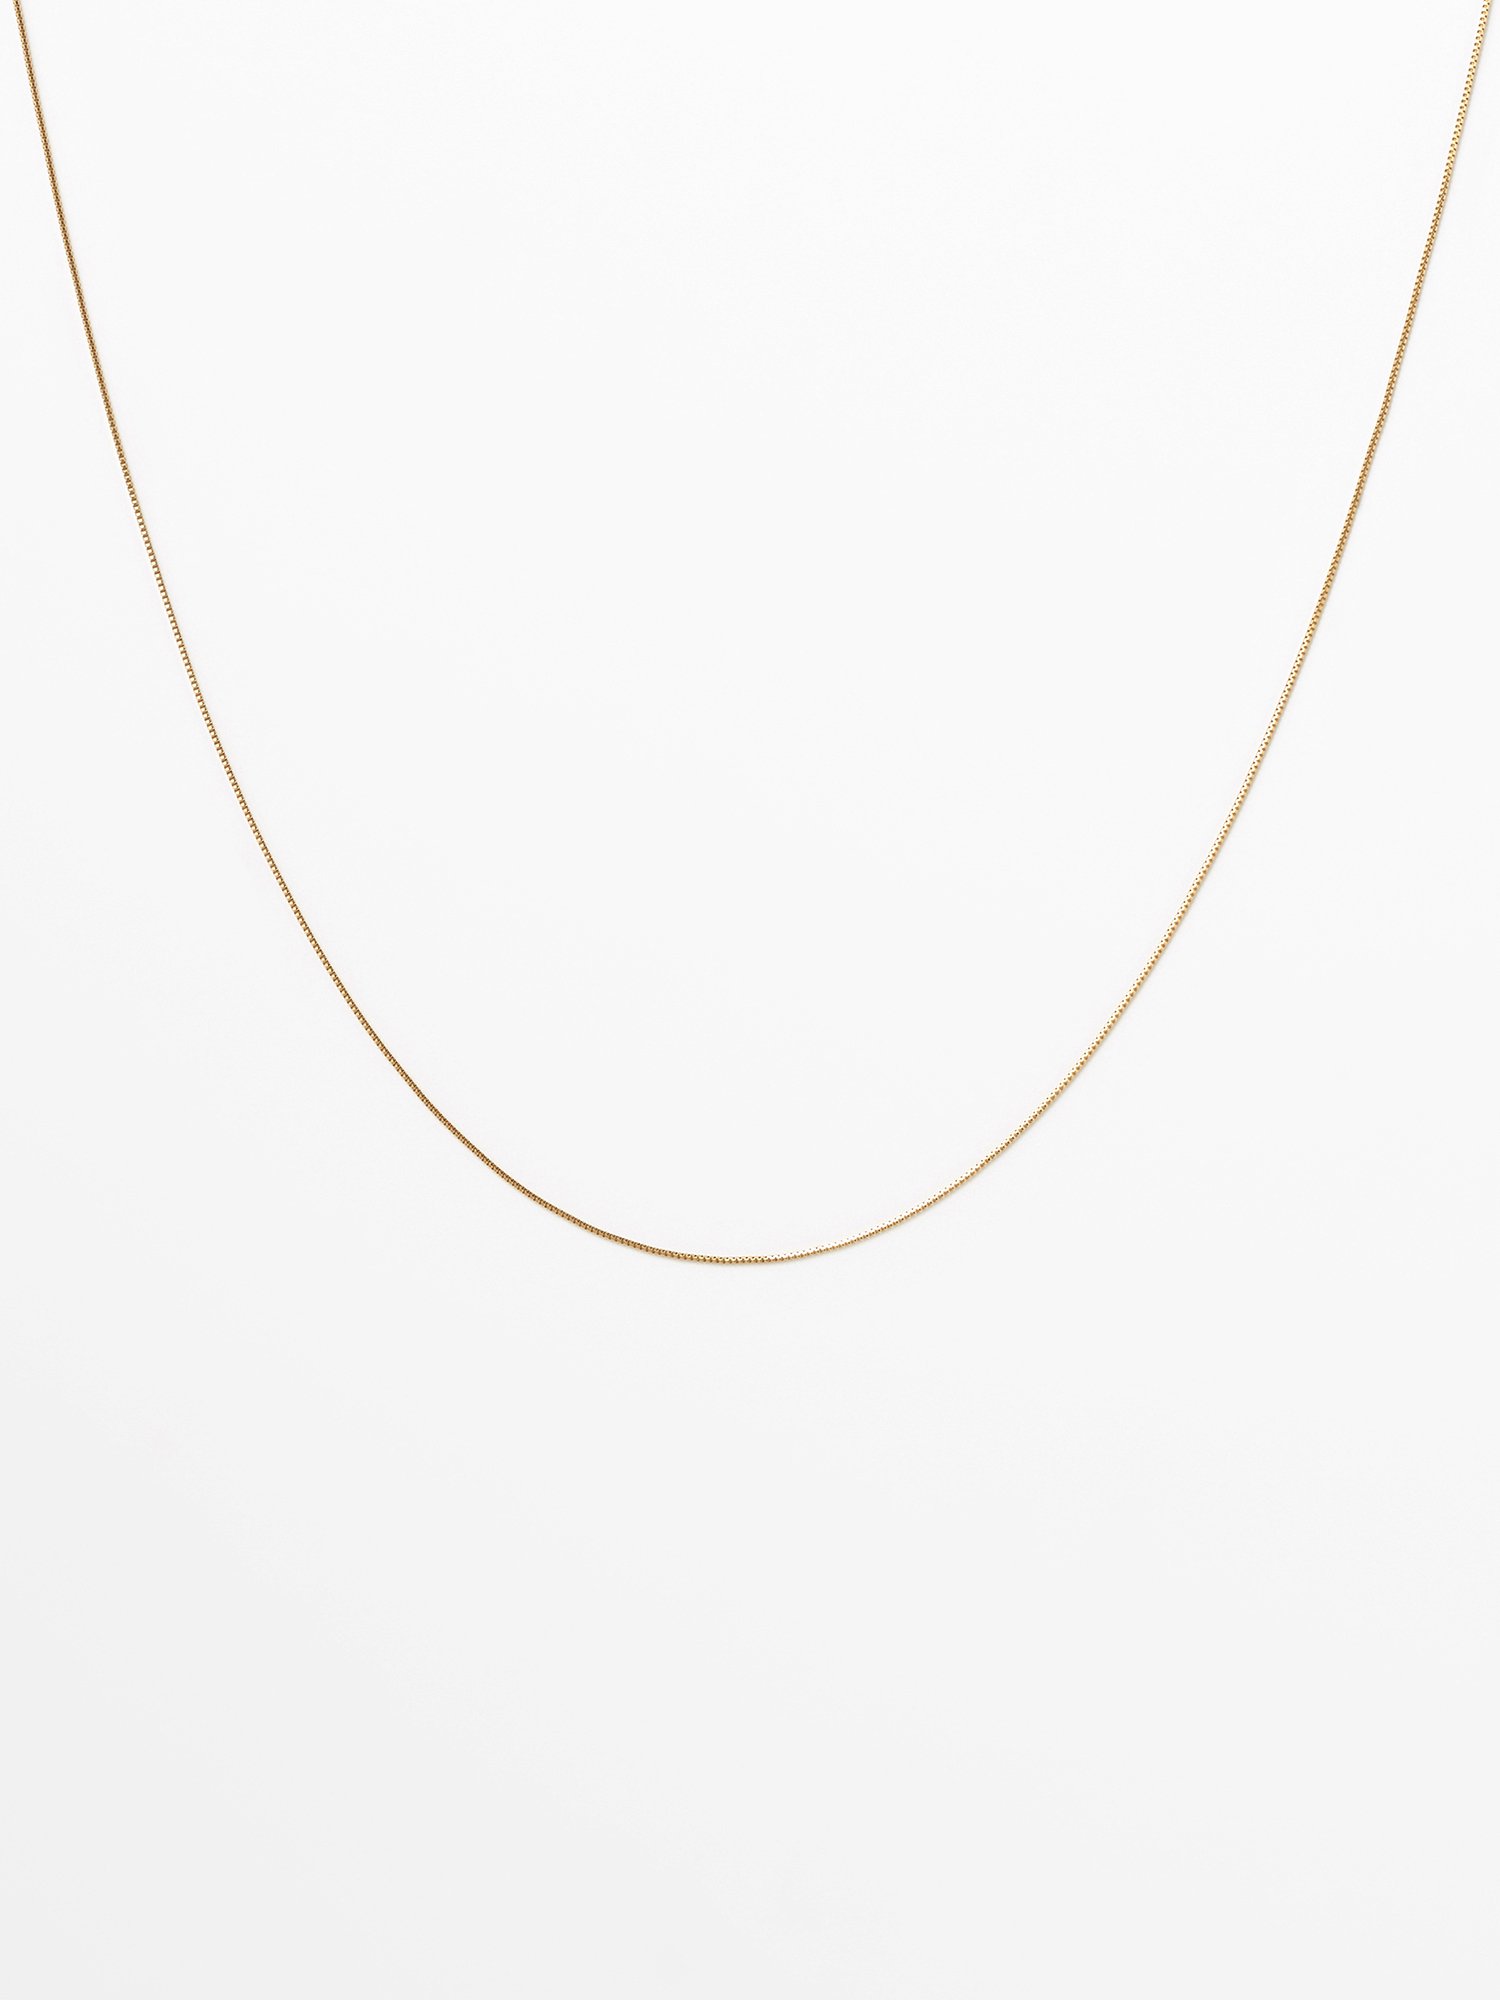 SOPHISTICATED VINTAGE / Gold line necklace / 380mm - GIGI Jewelry